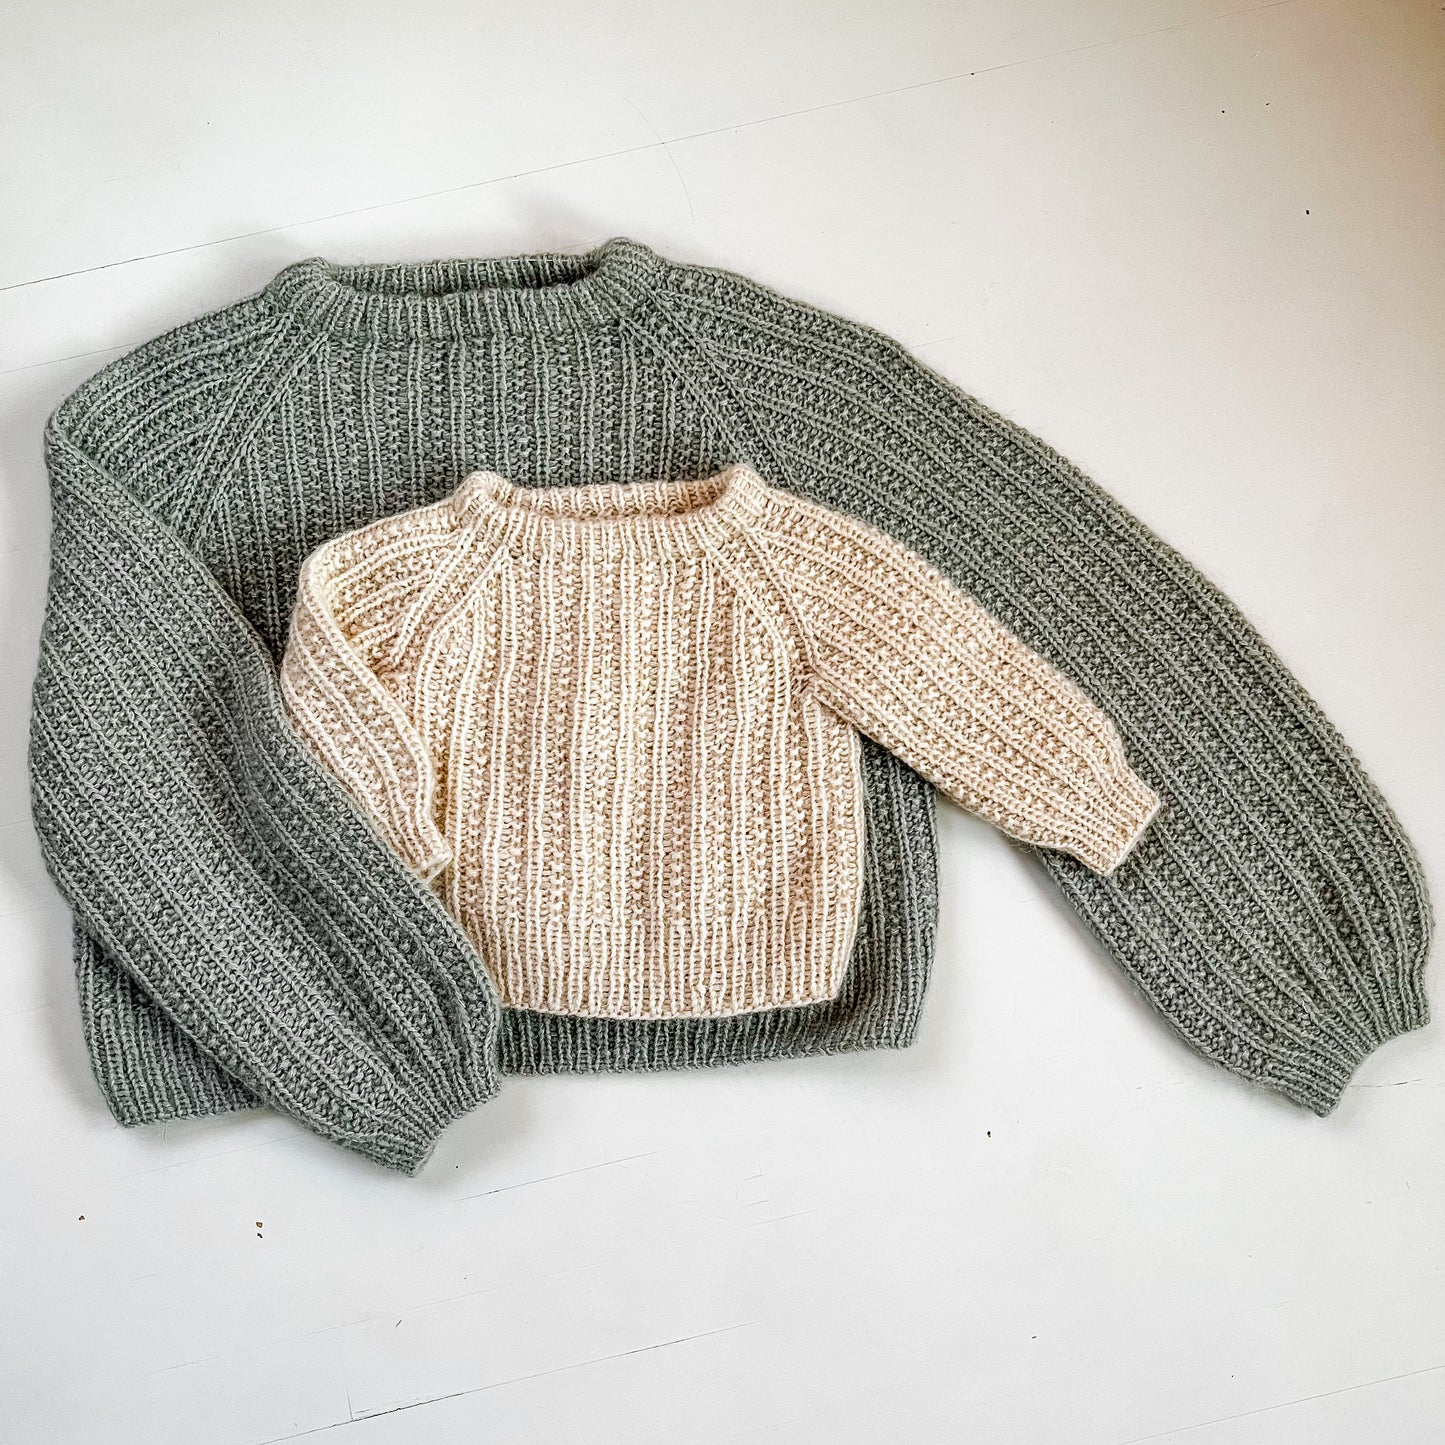 My Chunky Amalie Sweater